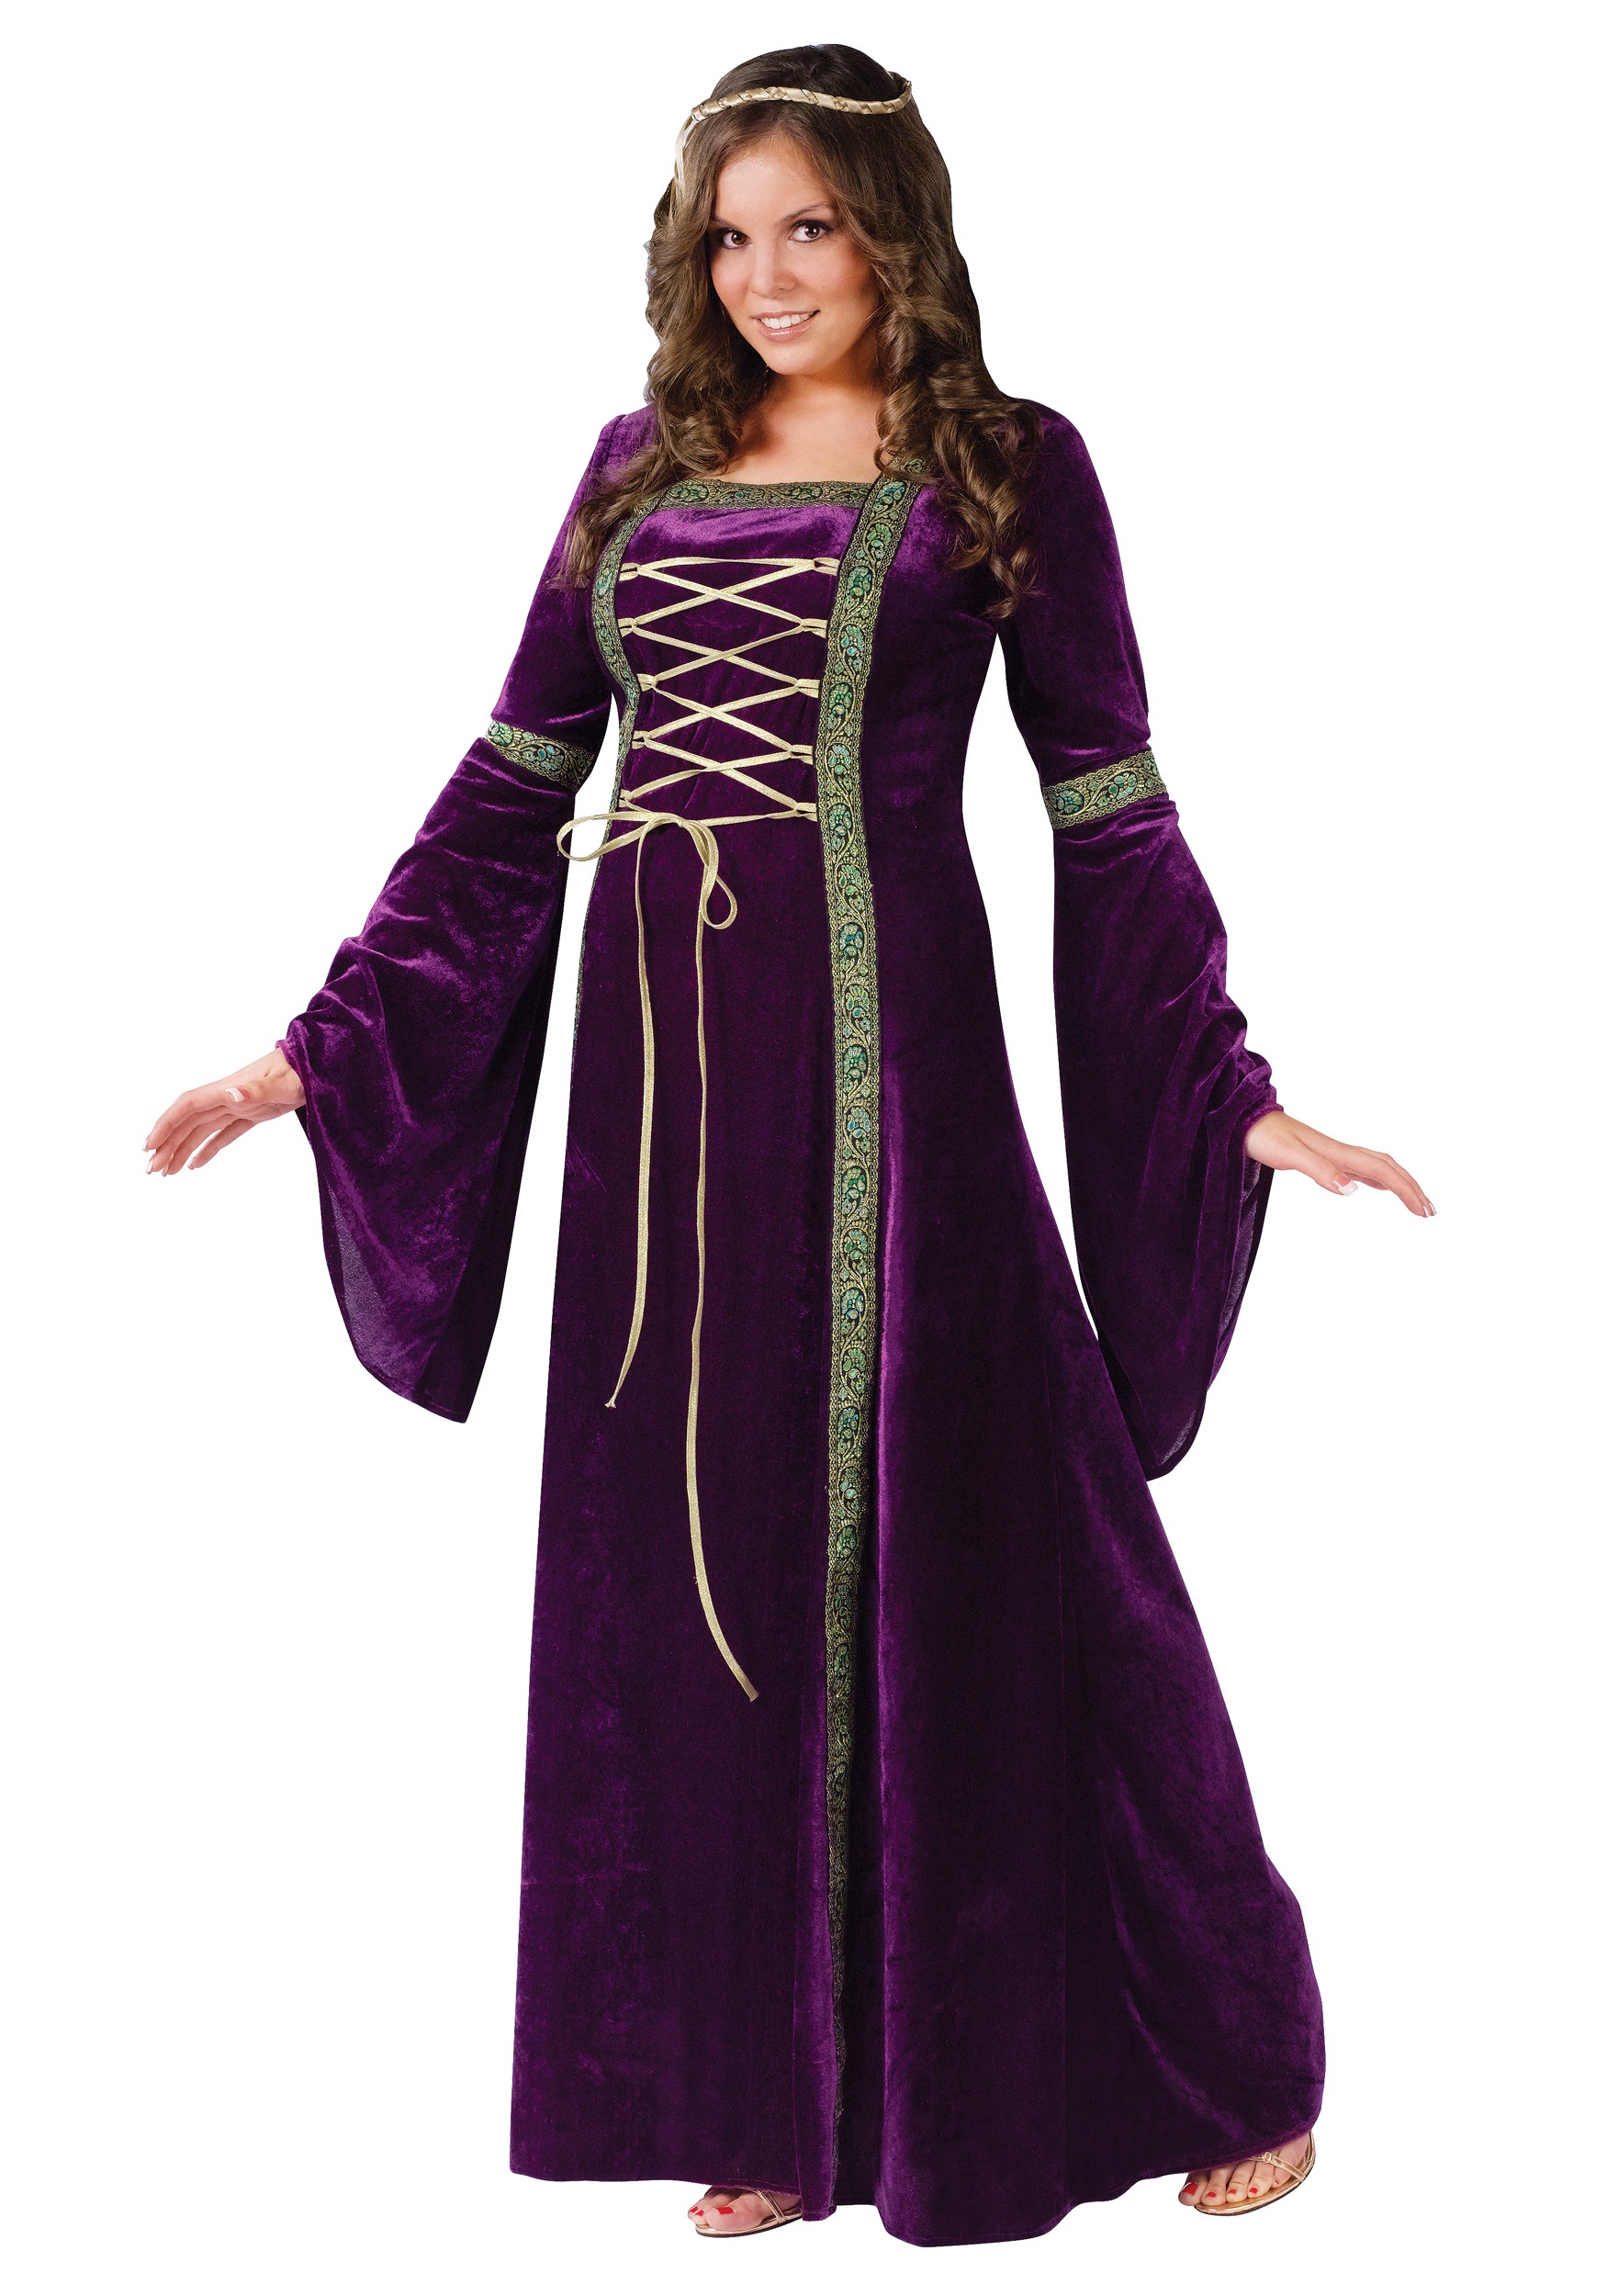 Image of Women's Plus Size Renaissance Lady Costume | Decade Costumes ID FU110015-PL